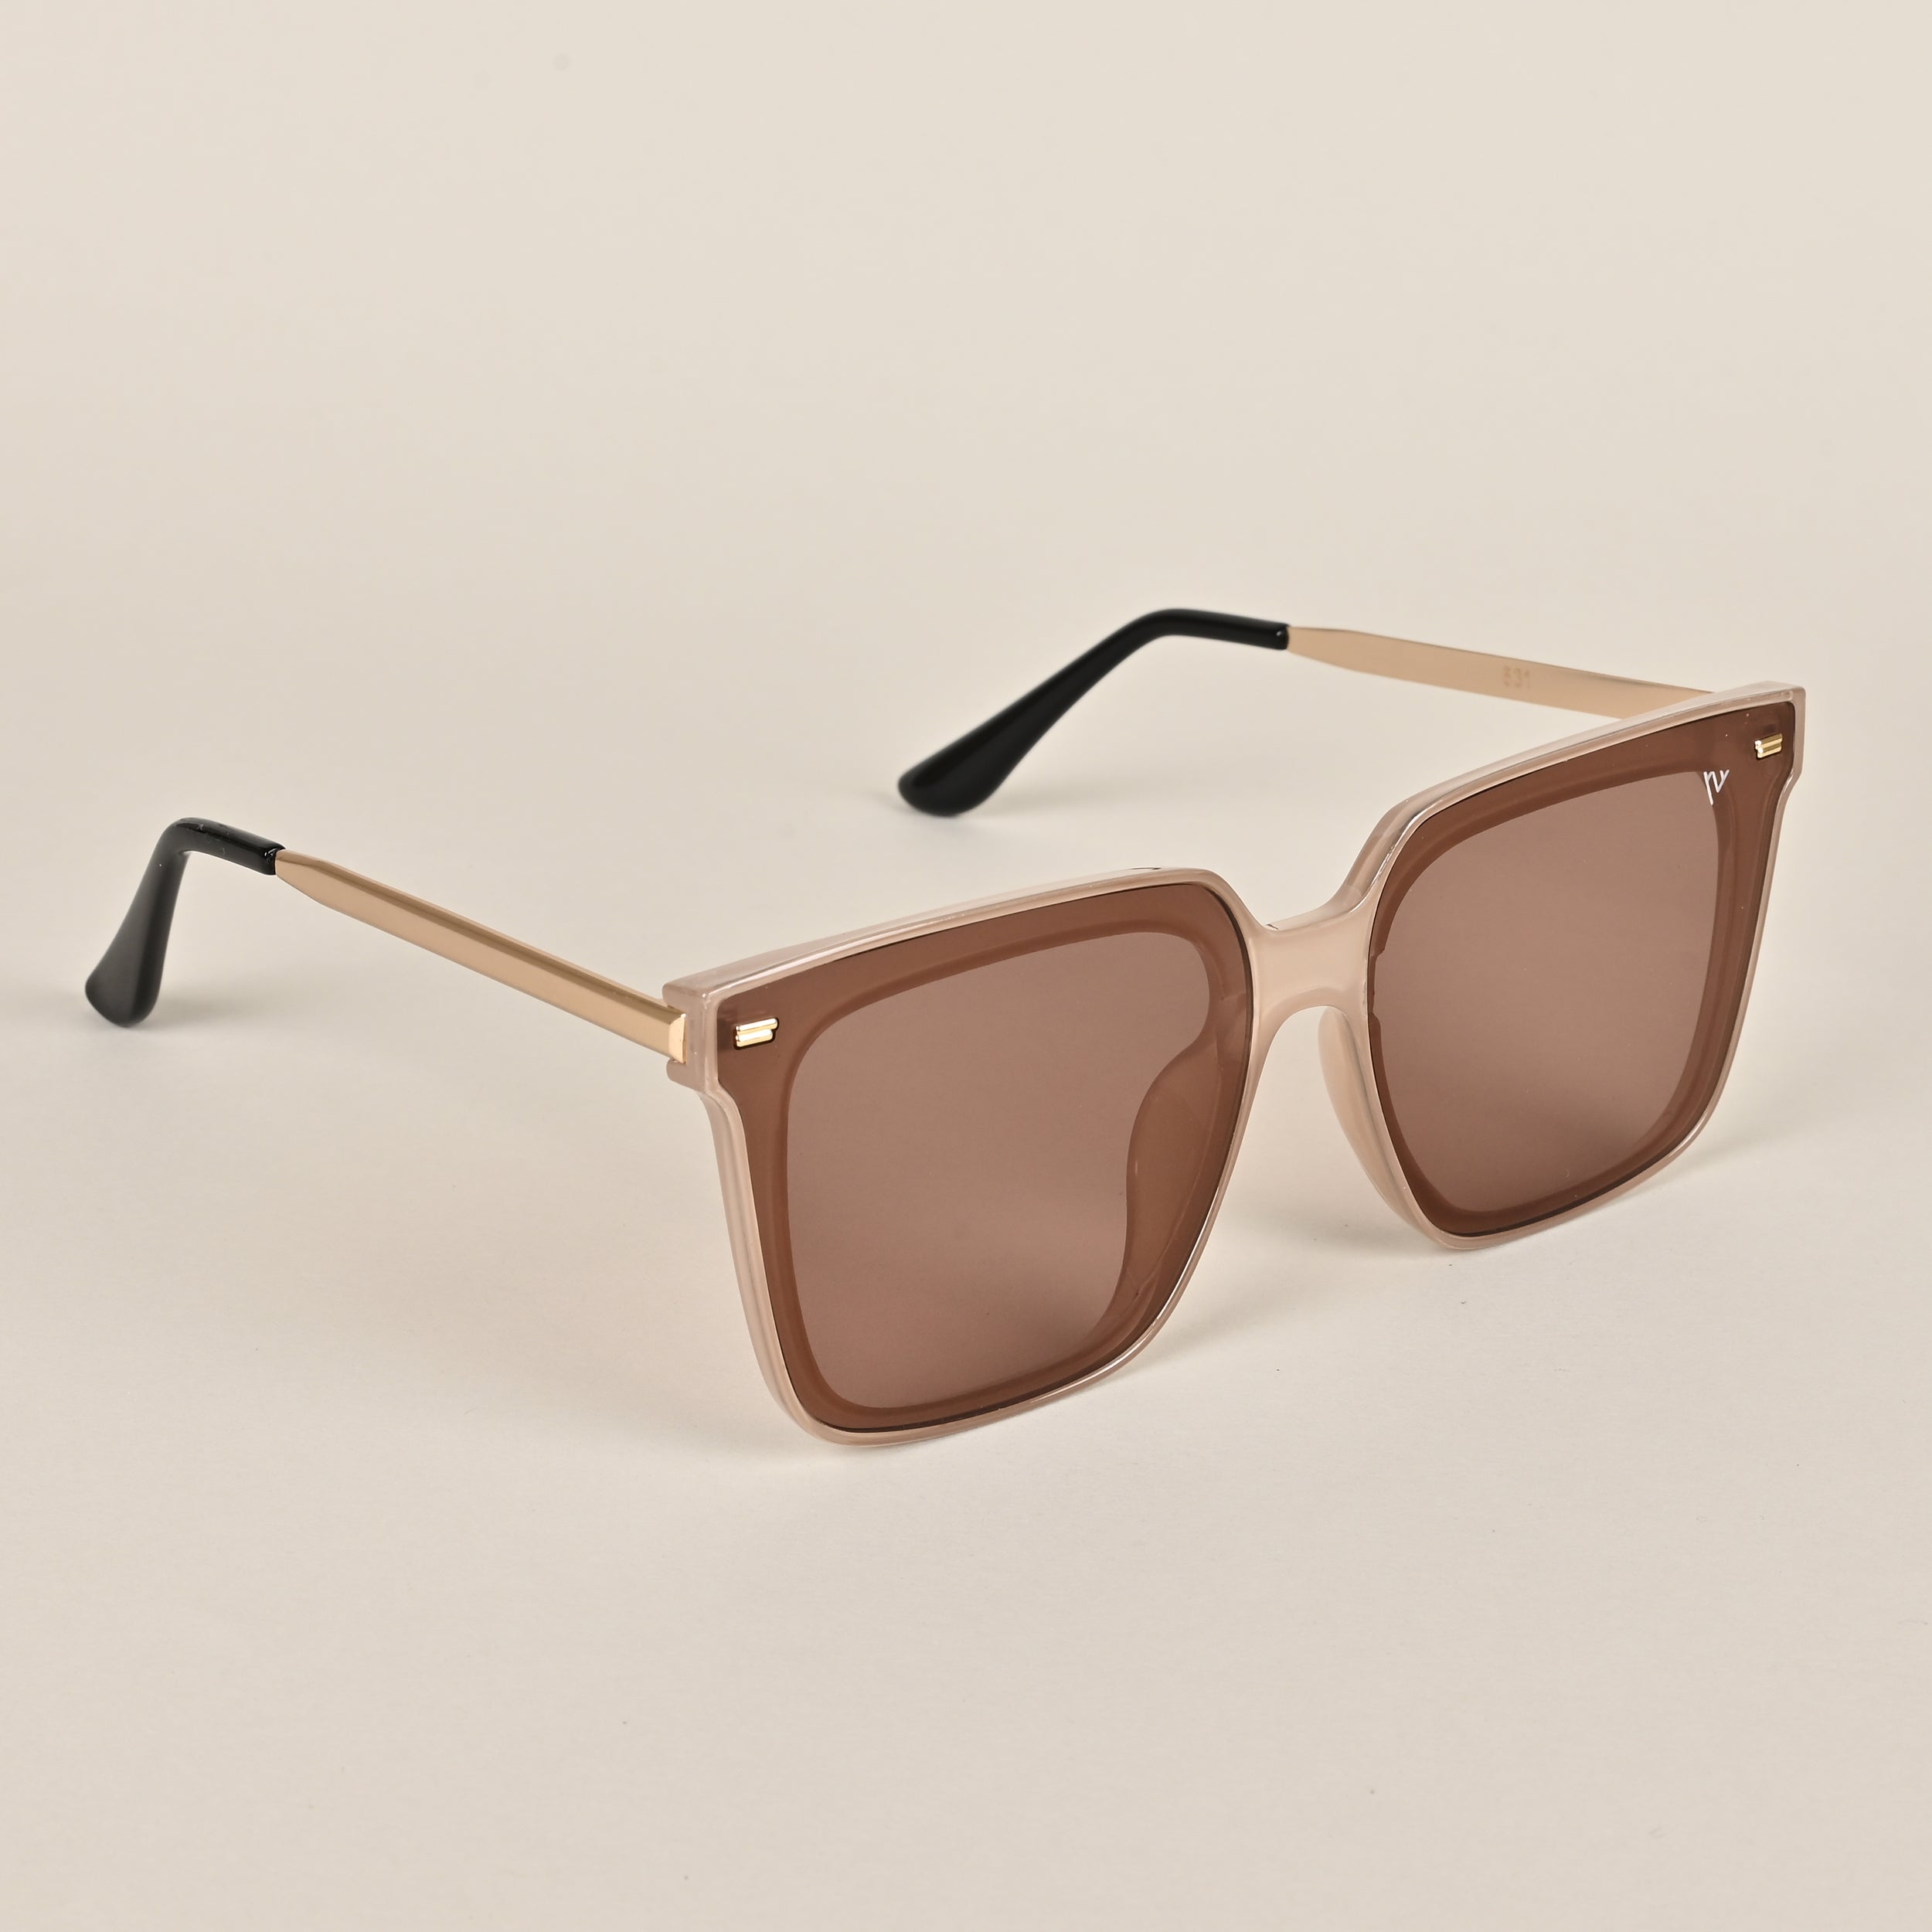 Voyage Brown Designed Wayfarer Sunglasses - MG3882